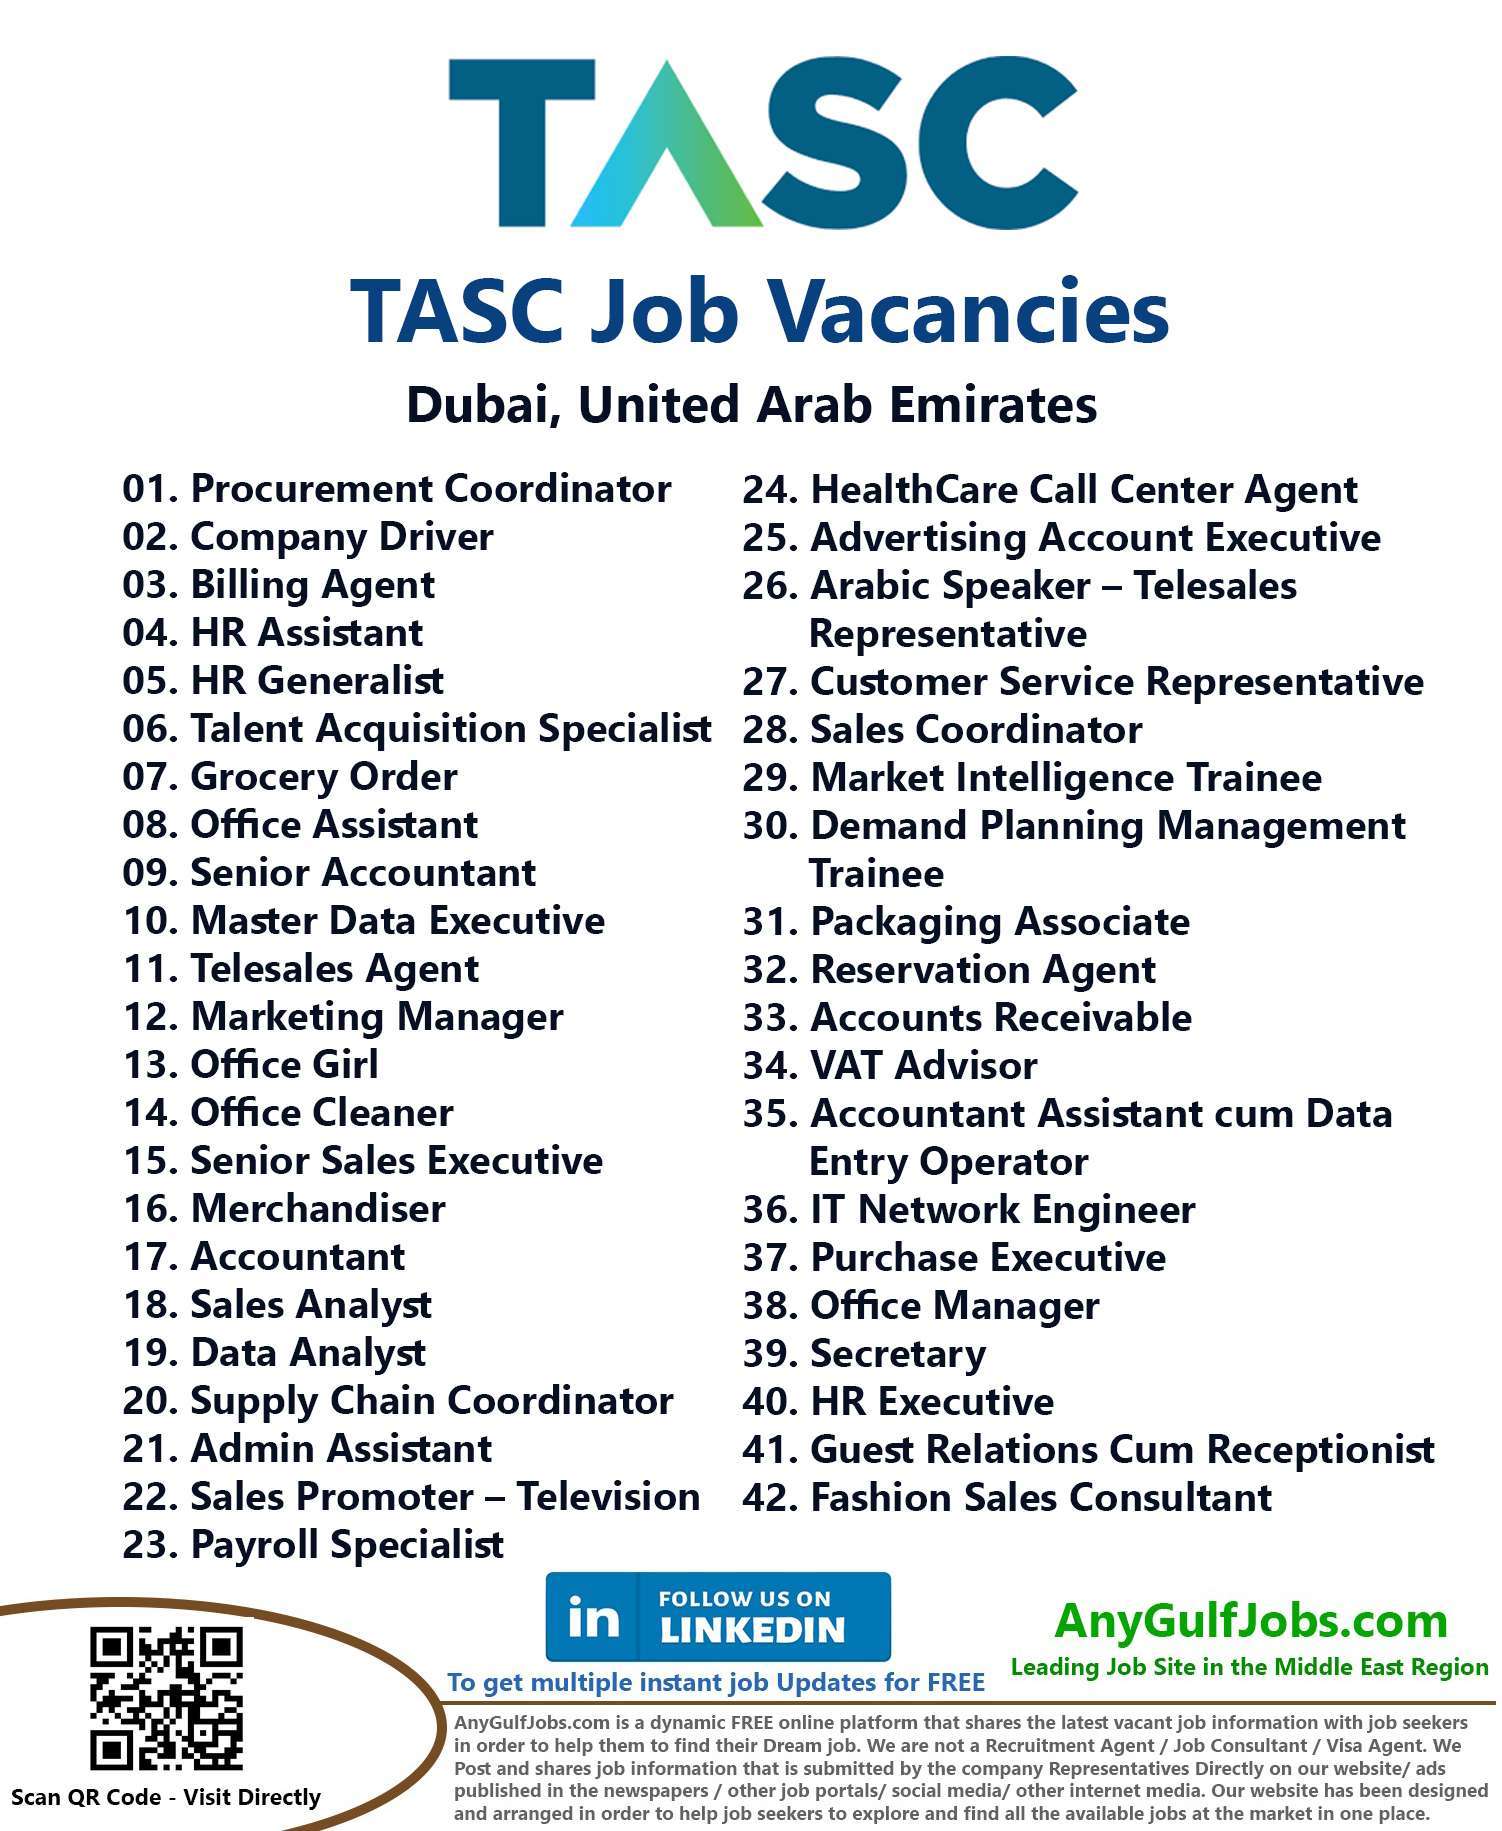 Multiple Job Vacancies  - TASC Outsourcing Job Vacancies - Dubai, United Arab Emirates